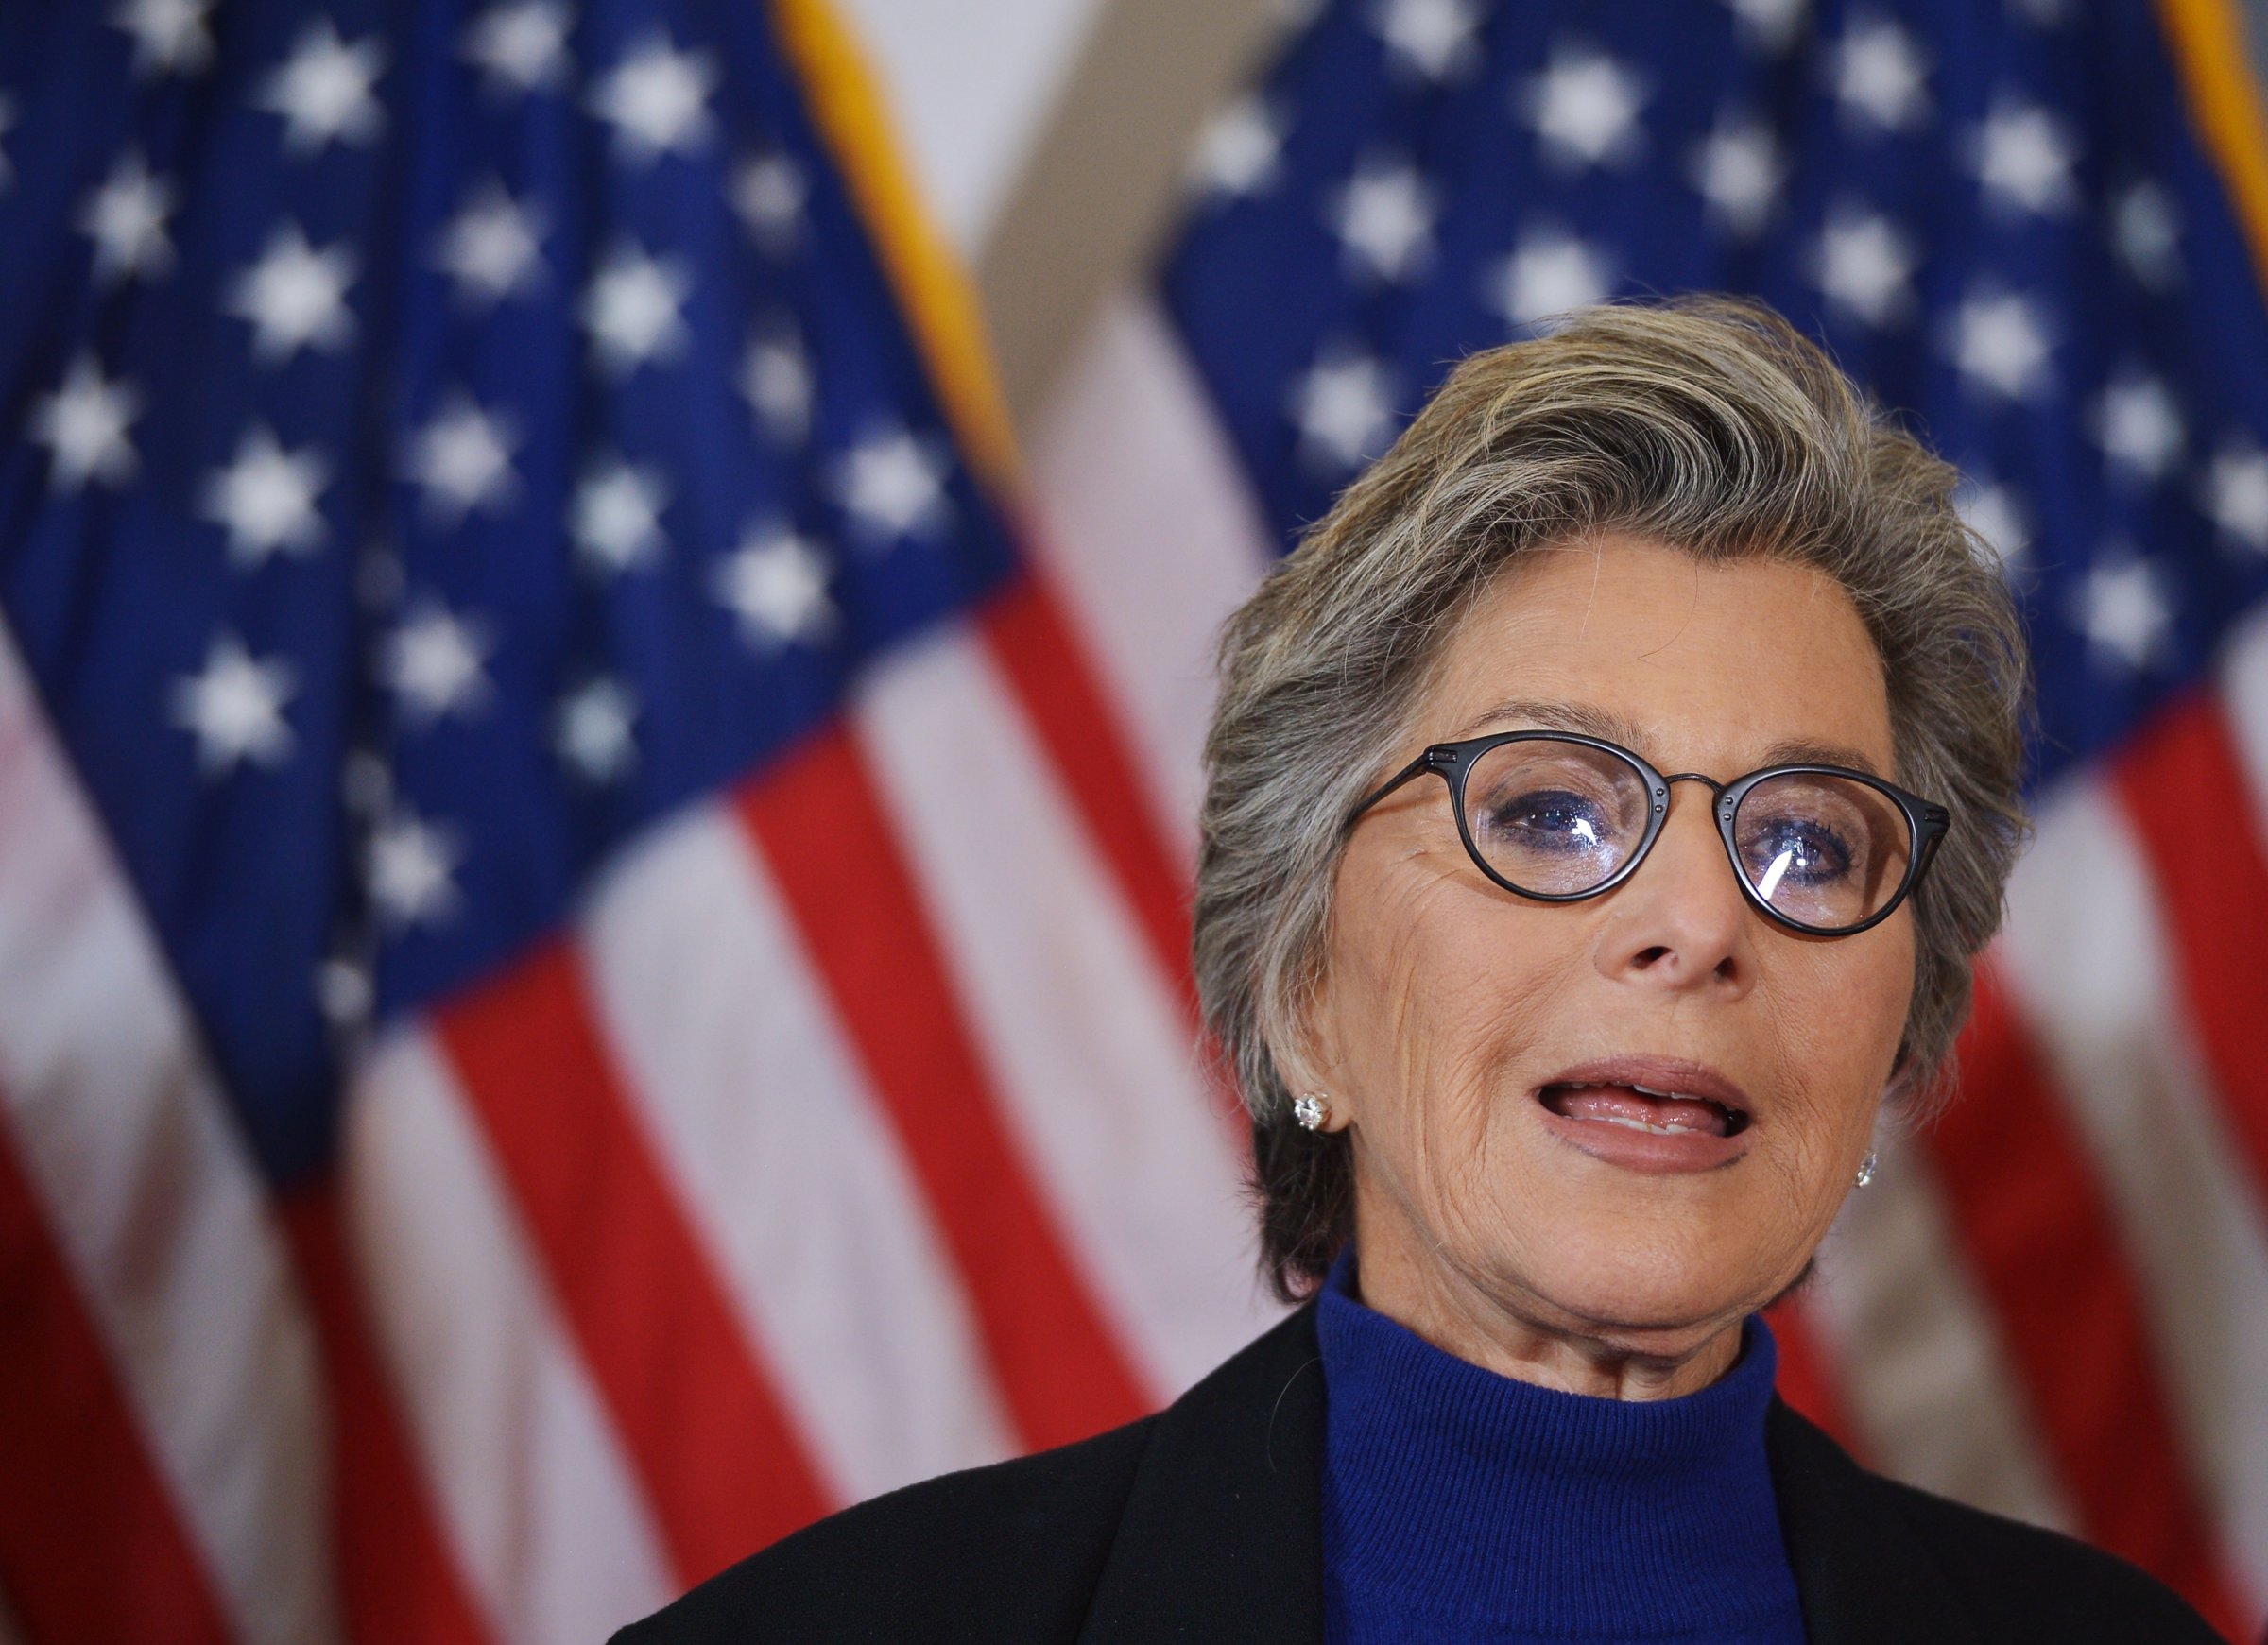 Senator Barbara Boxer speaks during a press conference in Washington on Feb. 6, 2014.